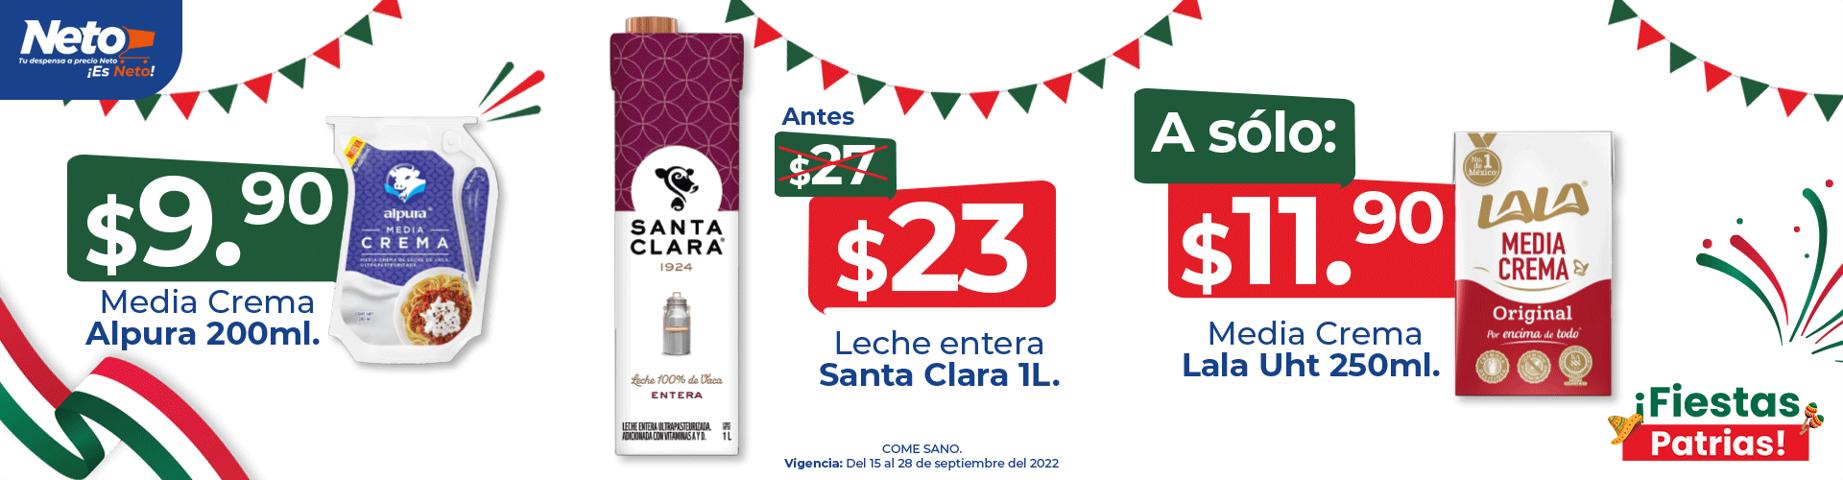 Ofertas de Hiper-Supermercados en Guadalajara | Ofertas Tiendas Neto de Tiendas Neto | 15/9/2022 - 28/9/2022